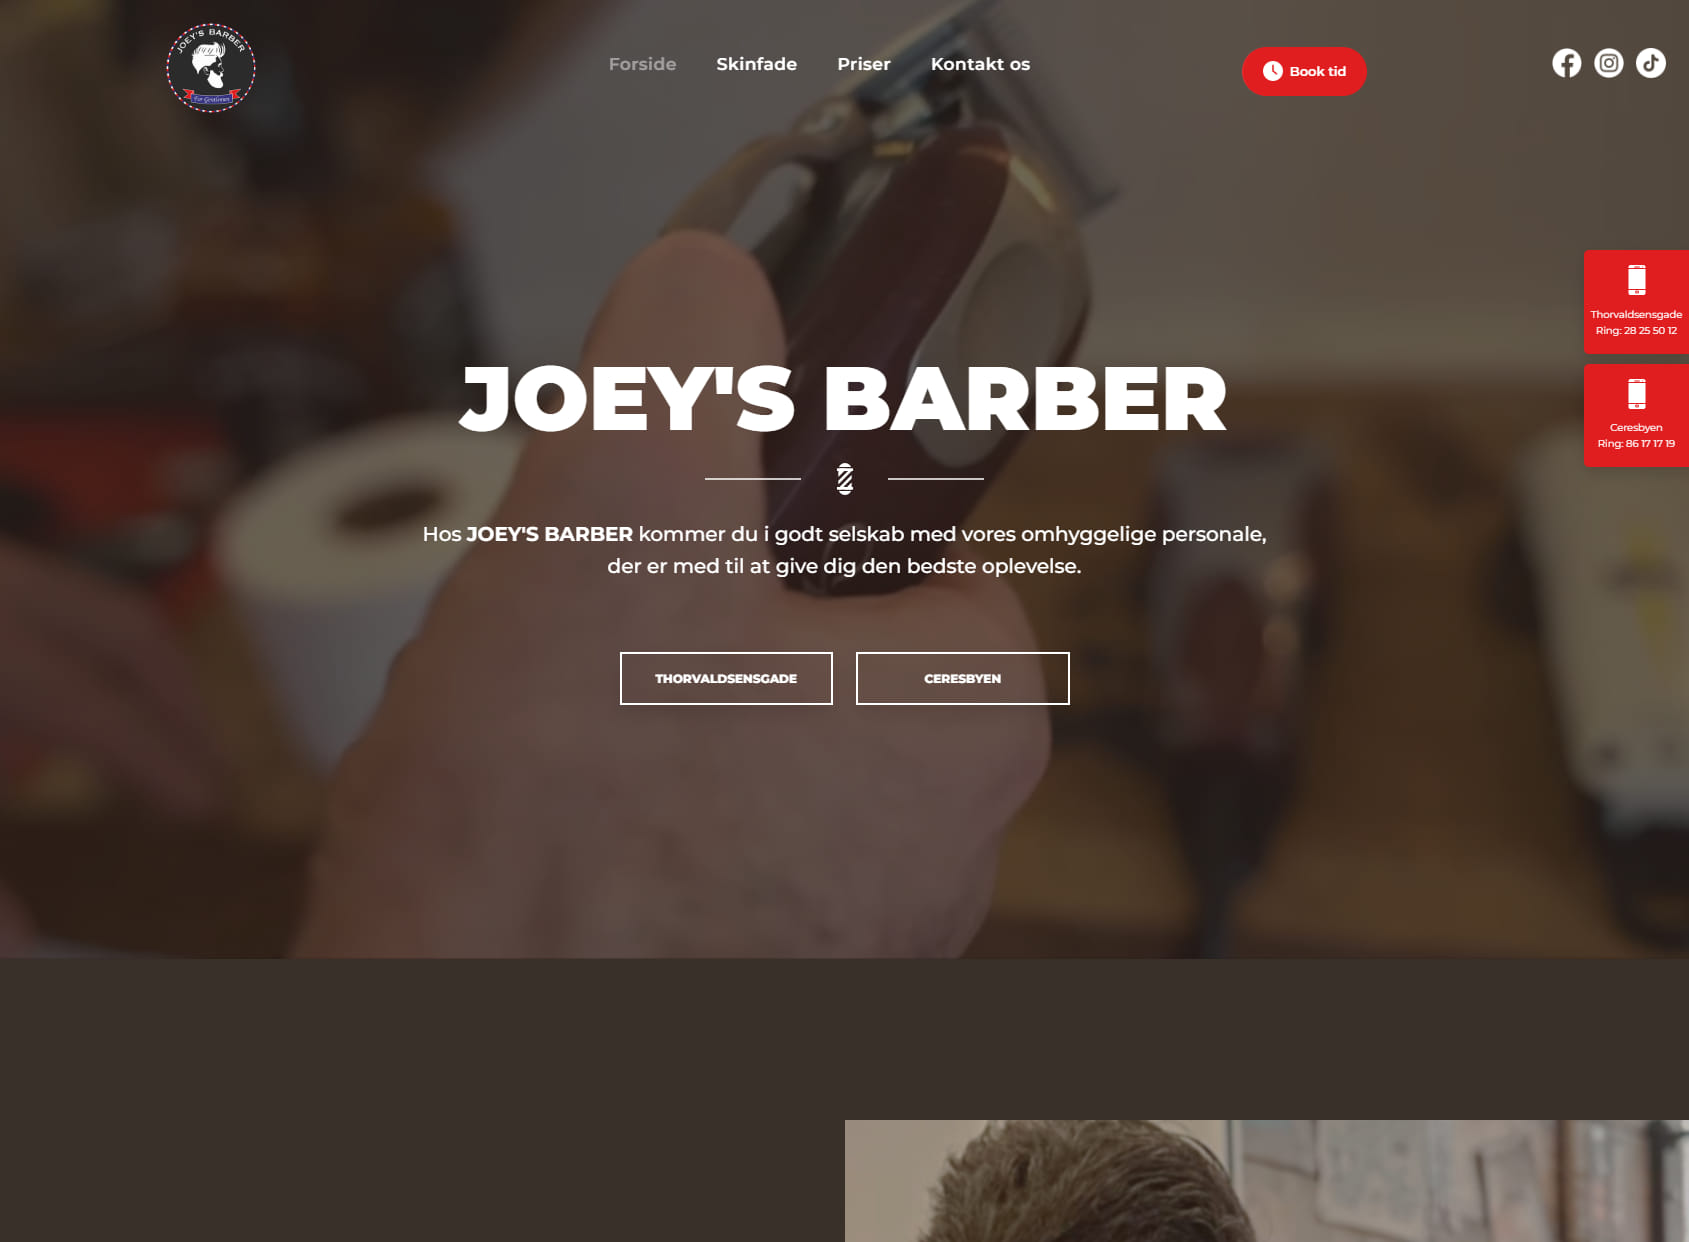 Joey’s Barber